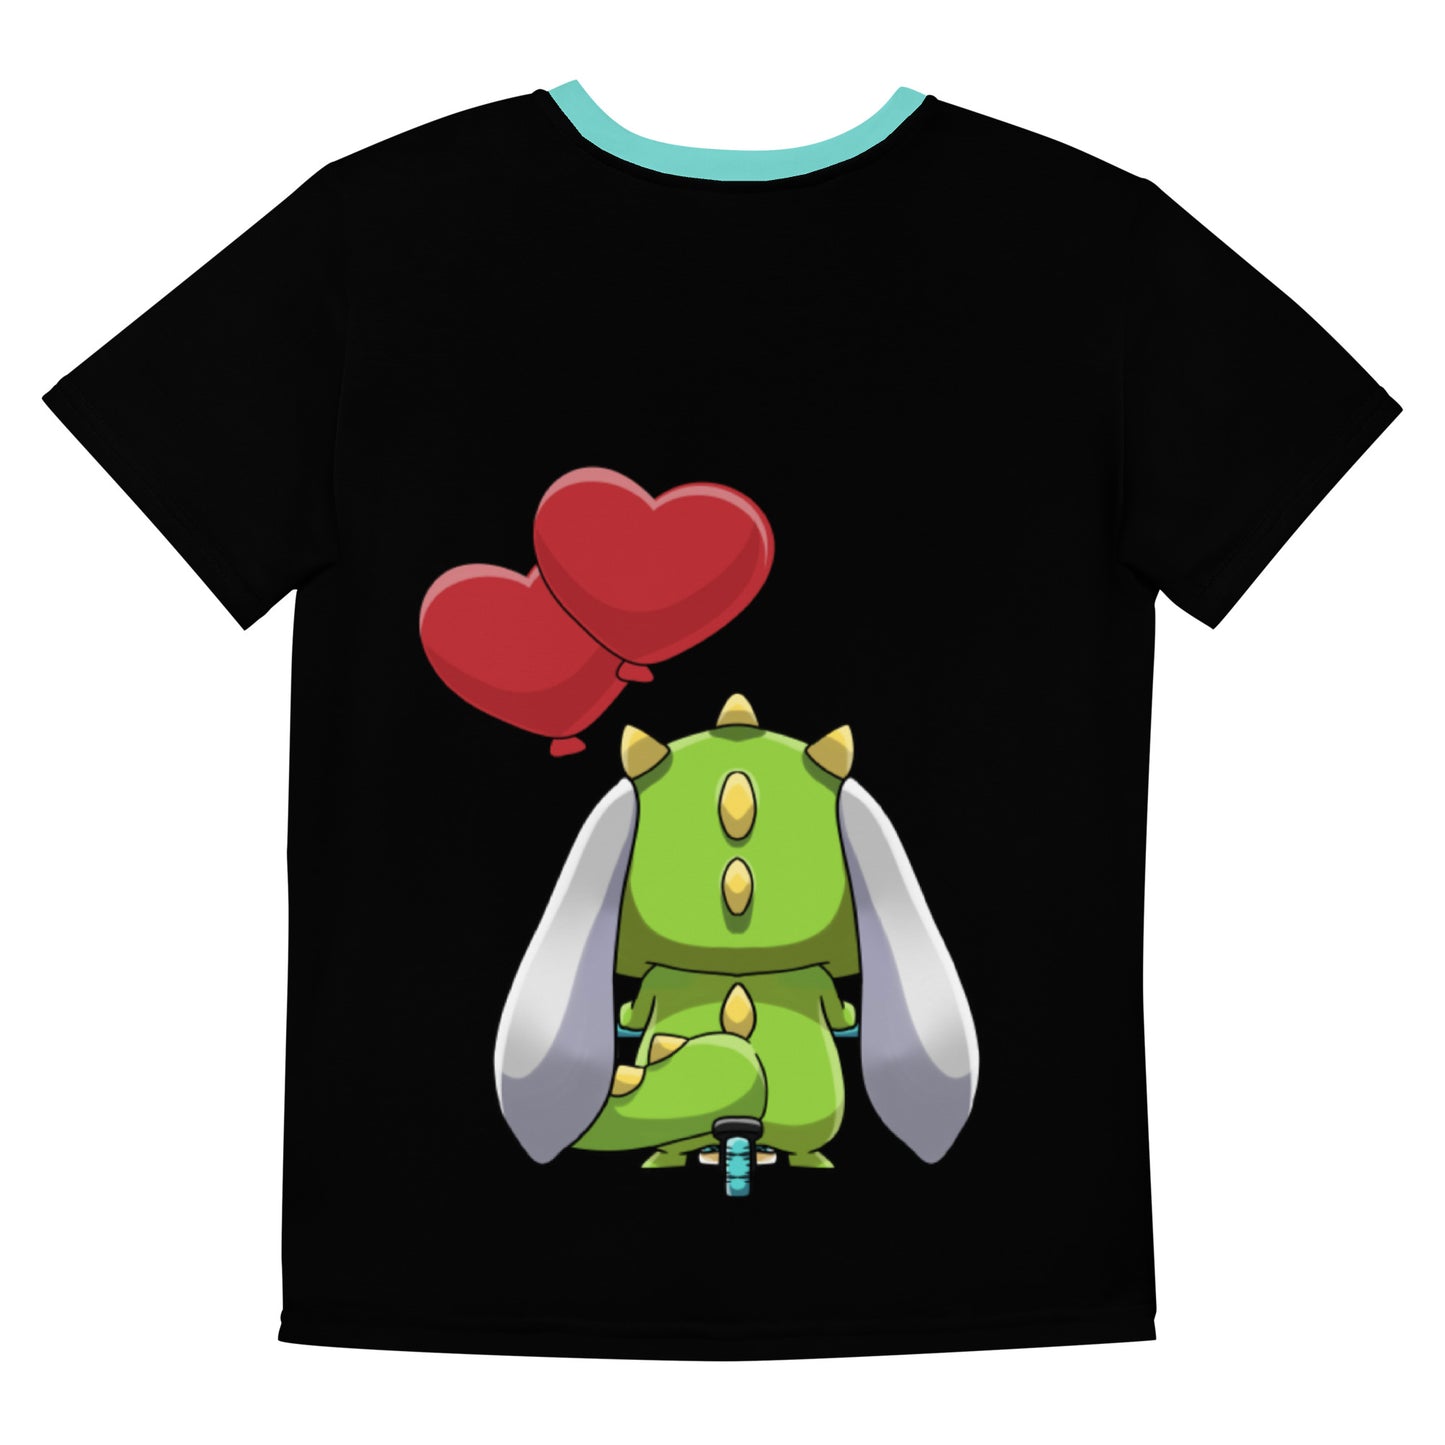 SVOLTA Kawaii Rebel Dino Love Front+Back Print T-shirt in Aqua, 8-20 - Kids/Youth